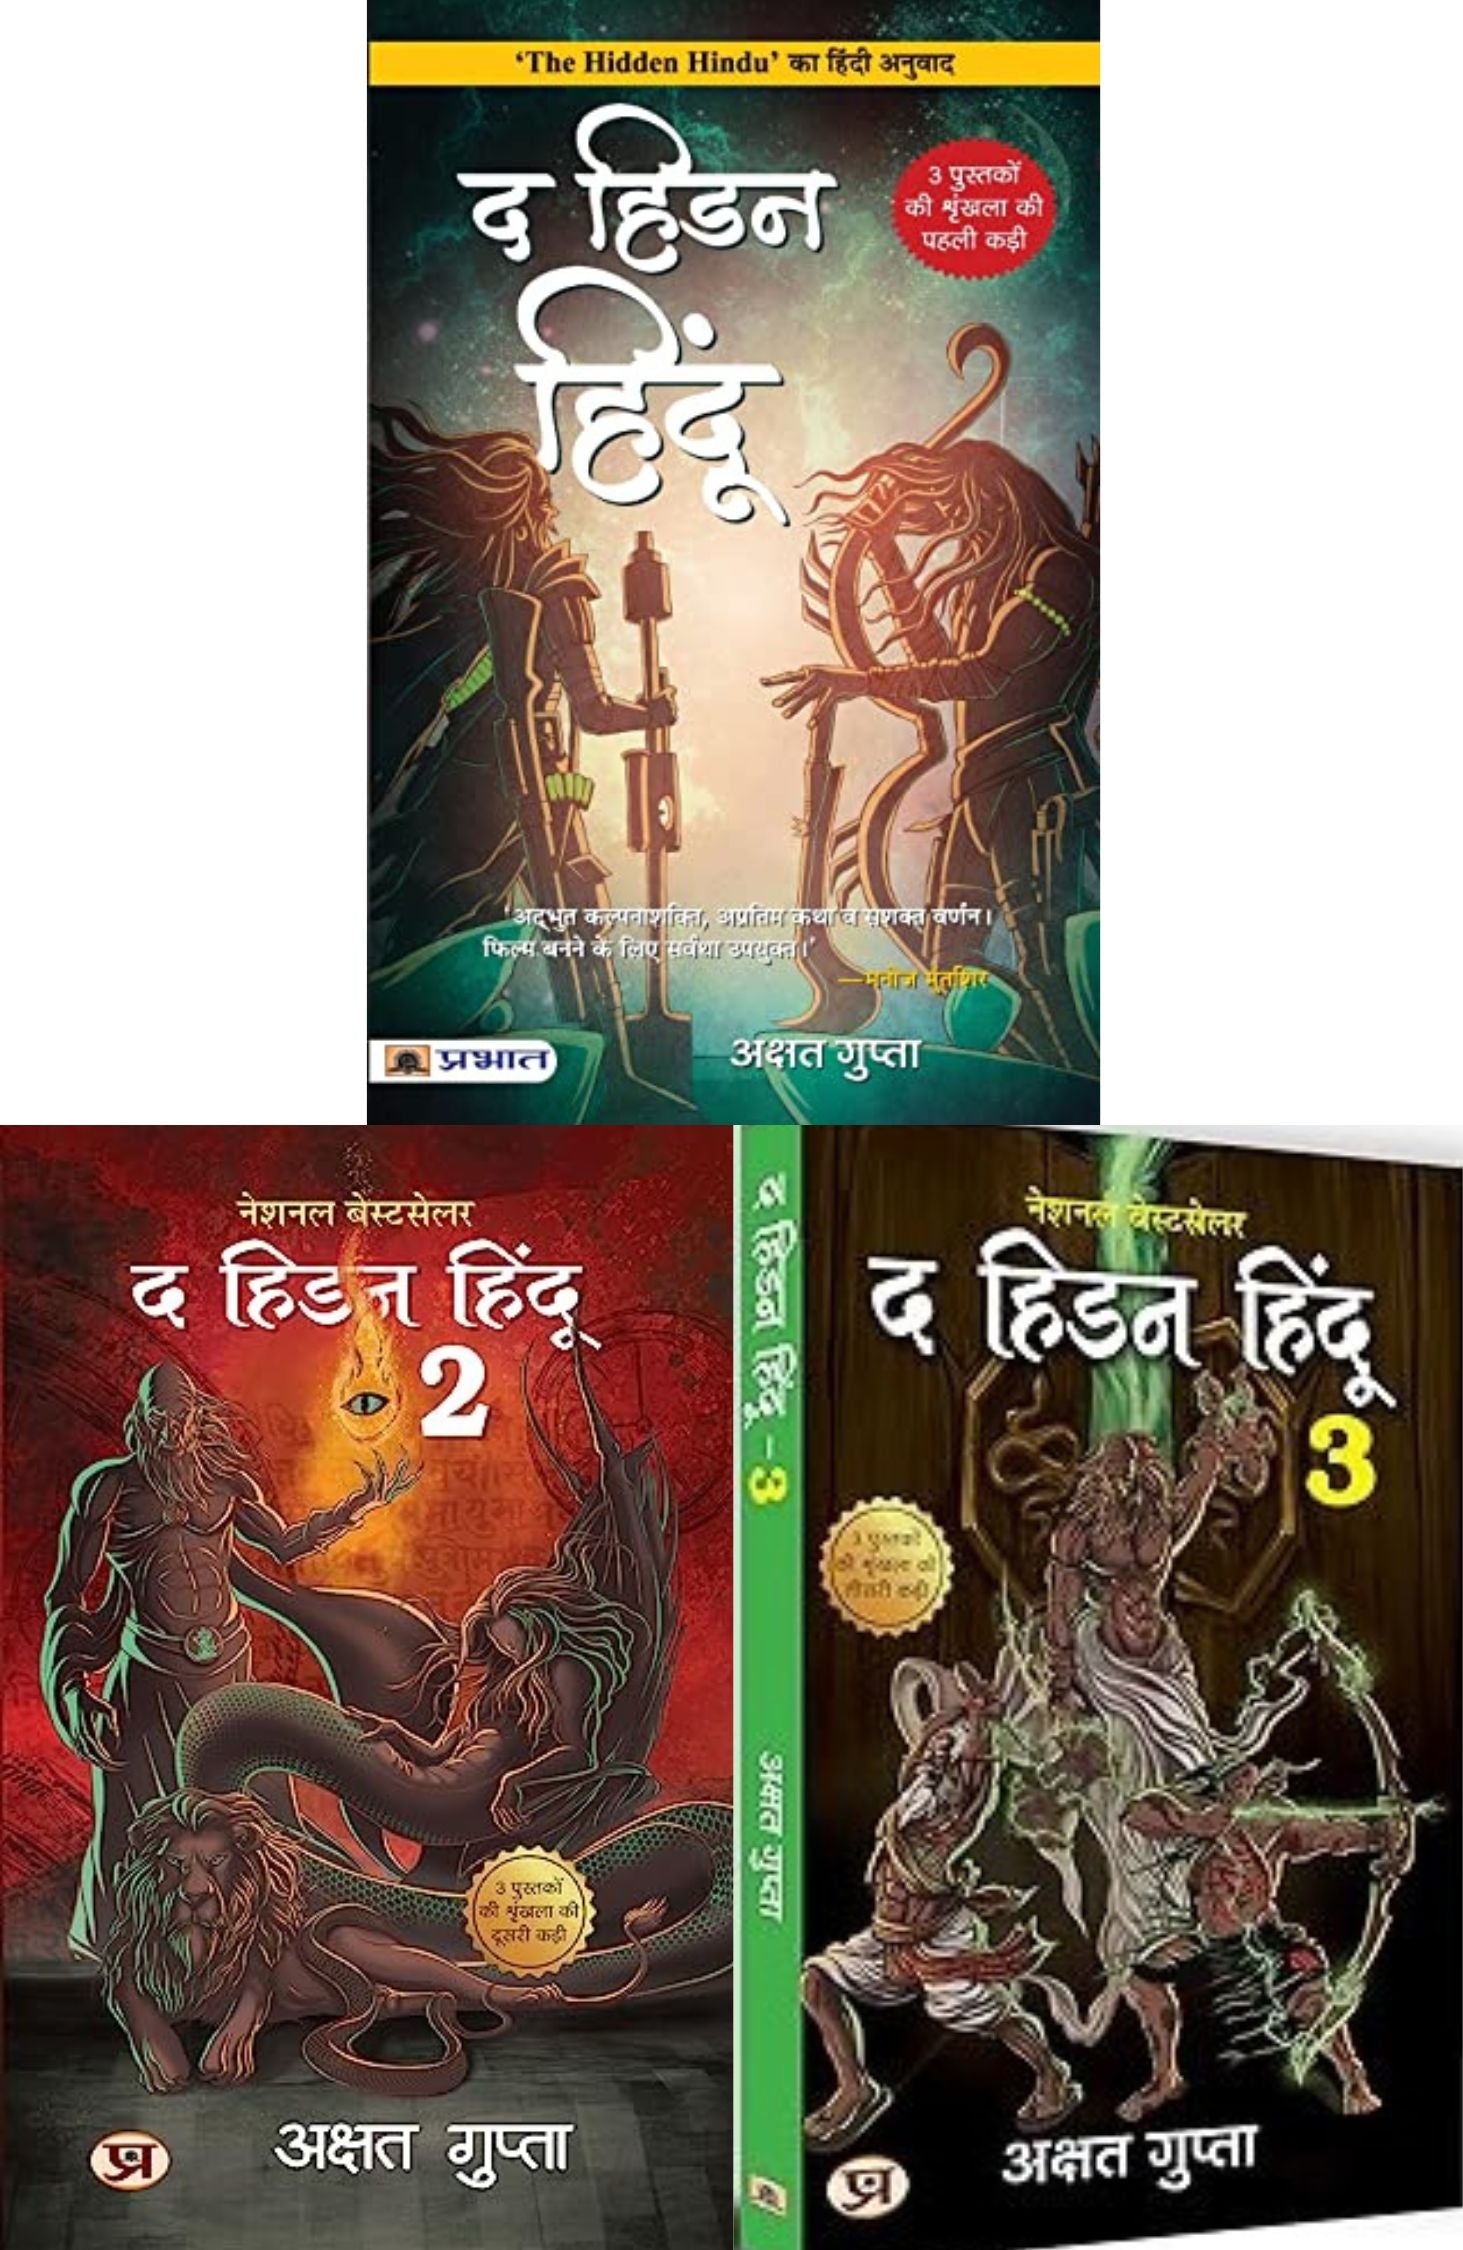 Hidden Hindu Triology Based on Hindu Mythology | The Hidden Hindu 1,2,3 &quot;द हिडन हिंदू-1,2,3 | Premium Deluxe Edition Book in Hindi